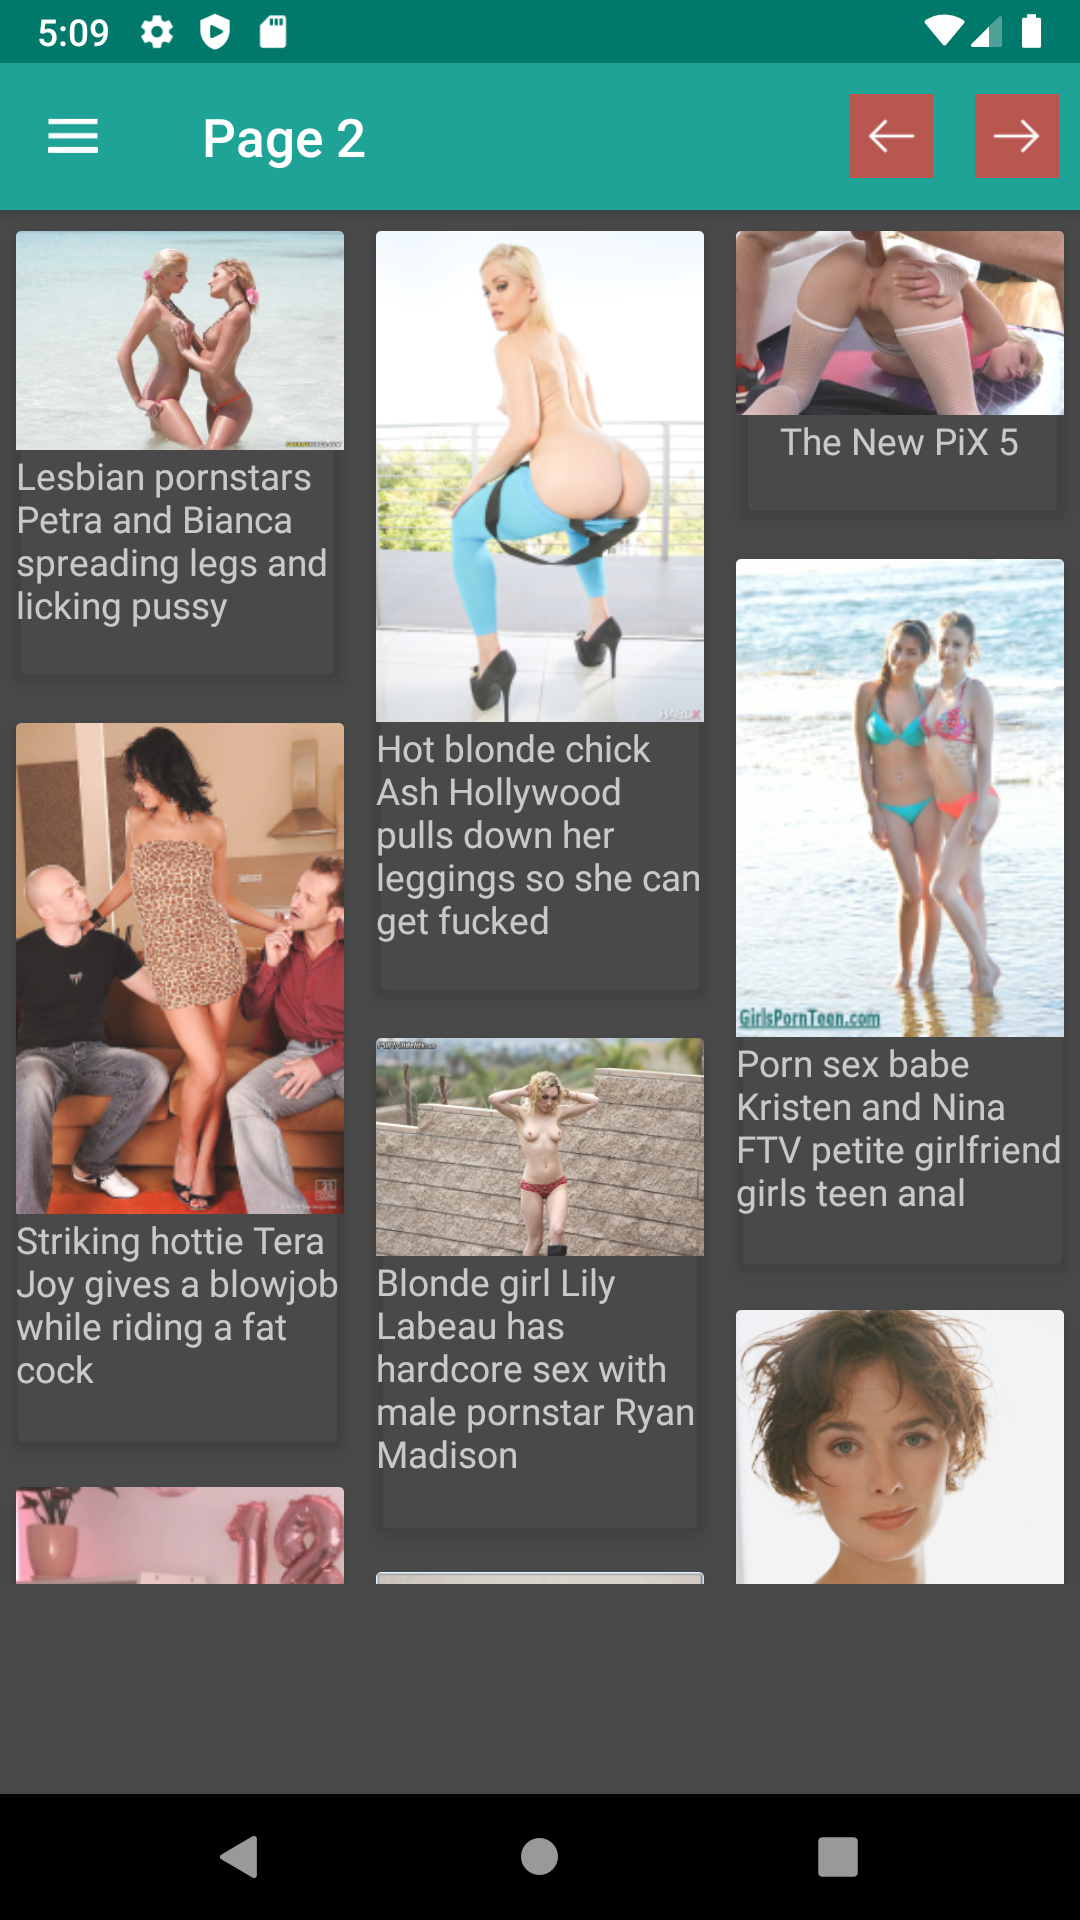 Porn For Women pic,pics,pornstar,sissy,hot,picture,porn,galleries,sexy,free,best,apk,hentai,pornstars,download,girls,gallery,apps,aplicativos